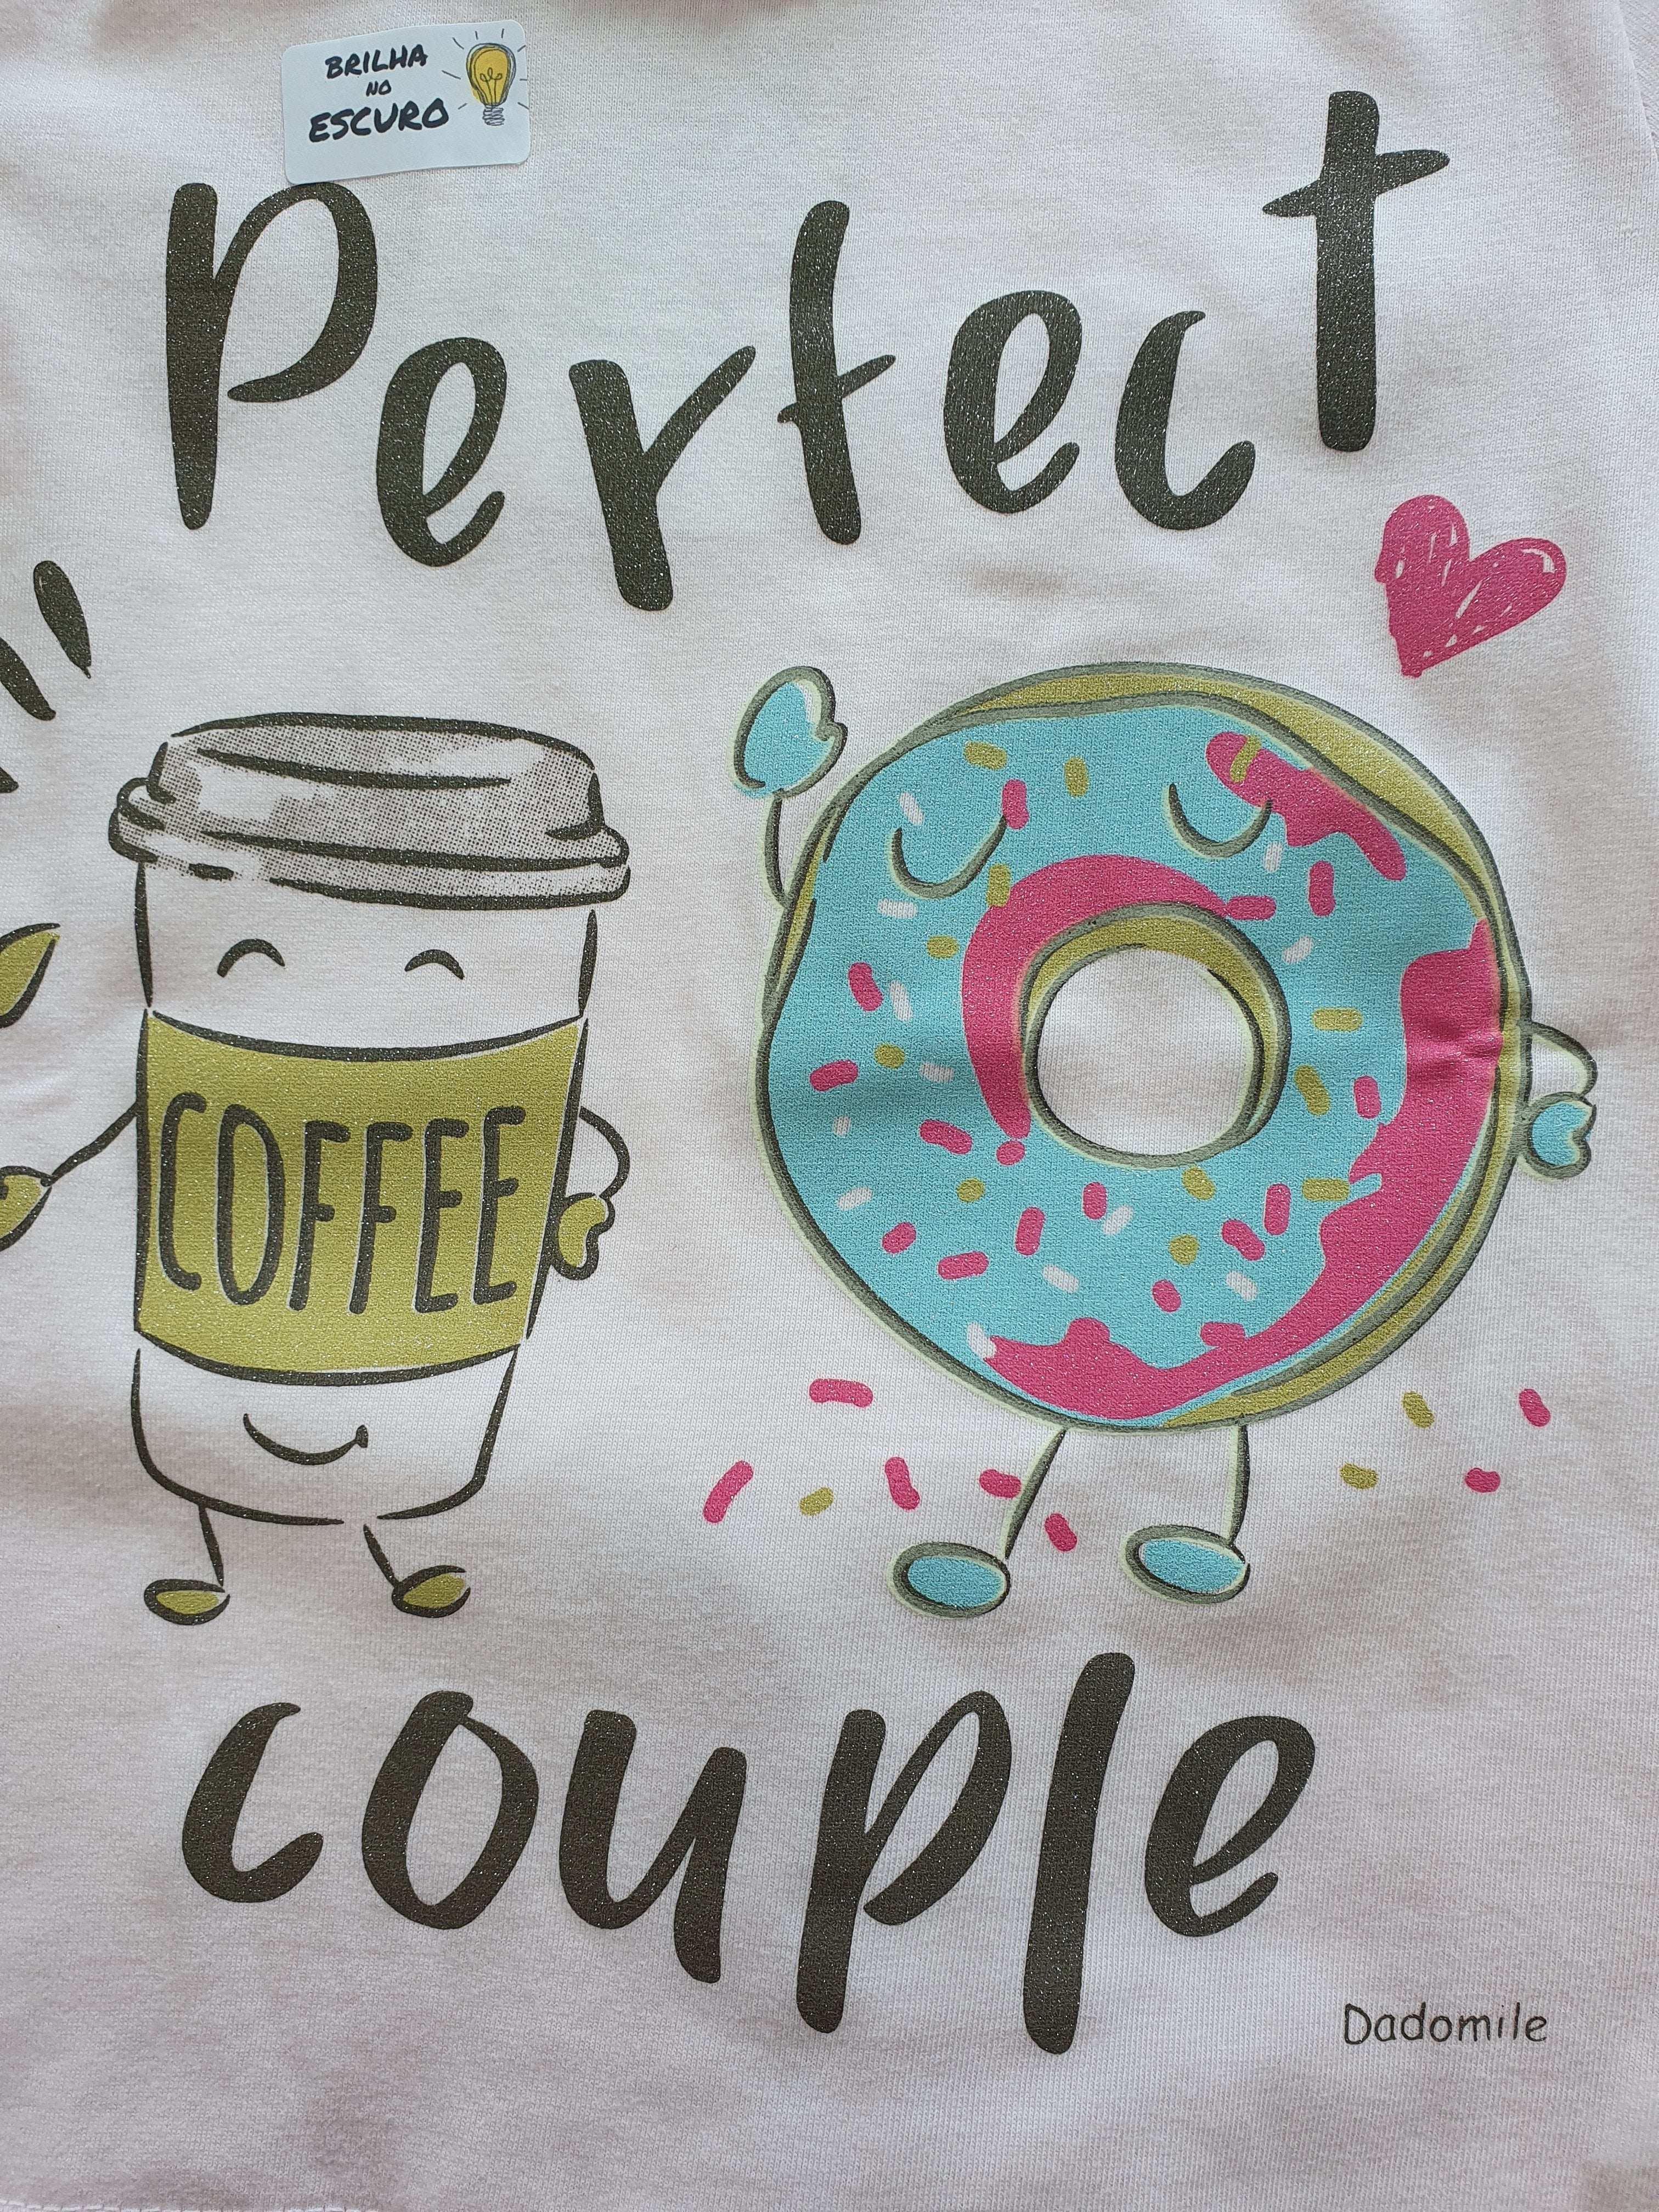 Pijama Perfect Couple